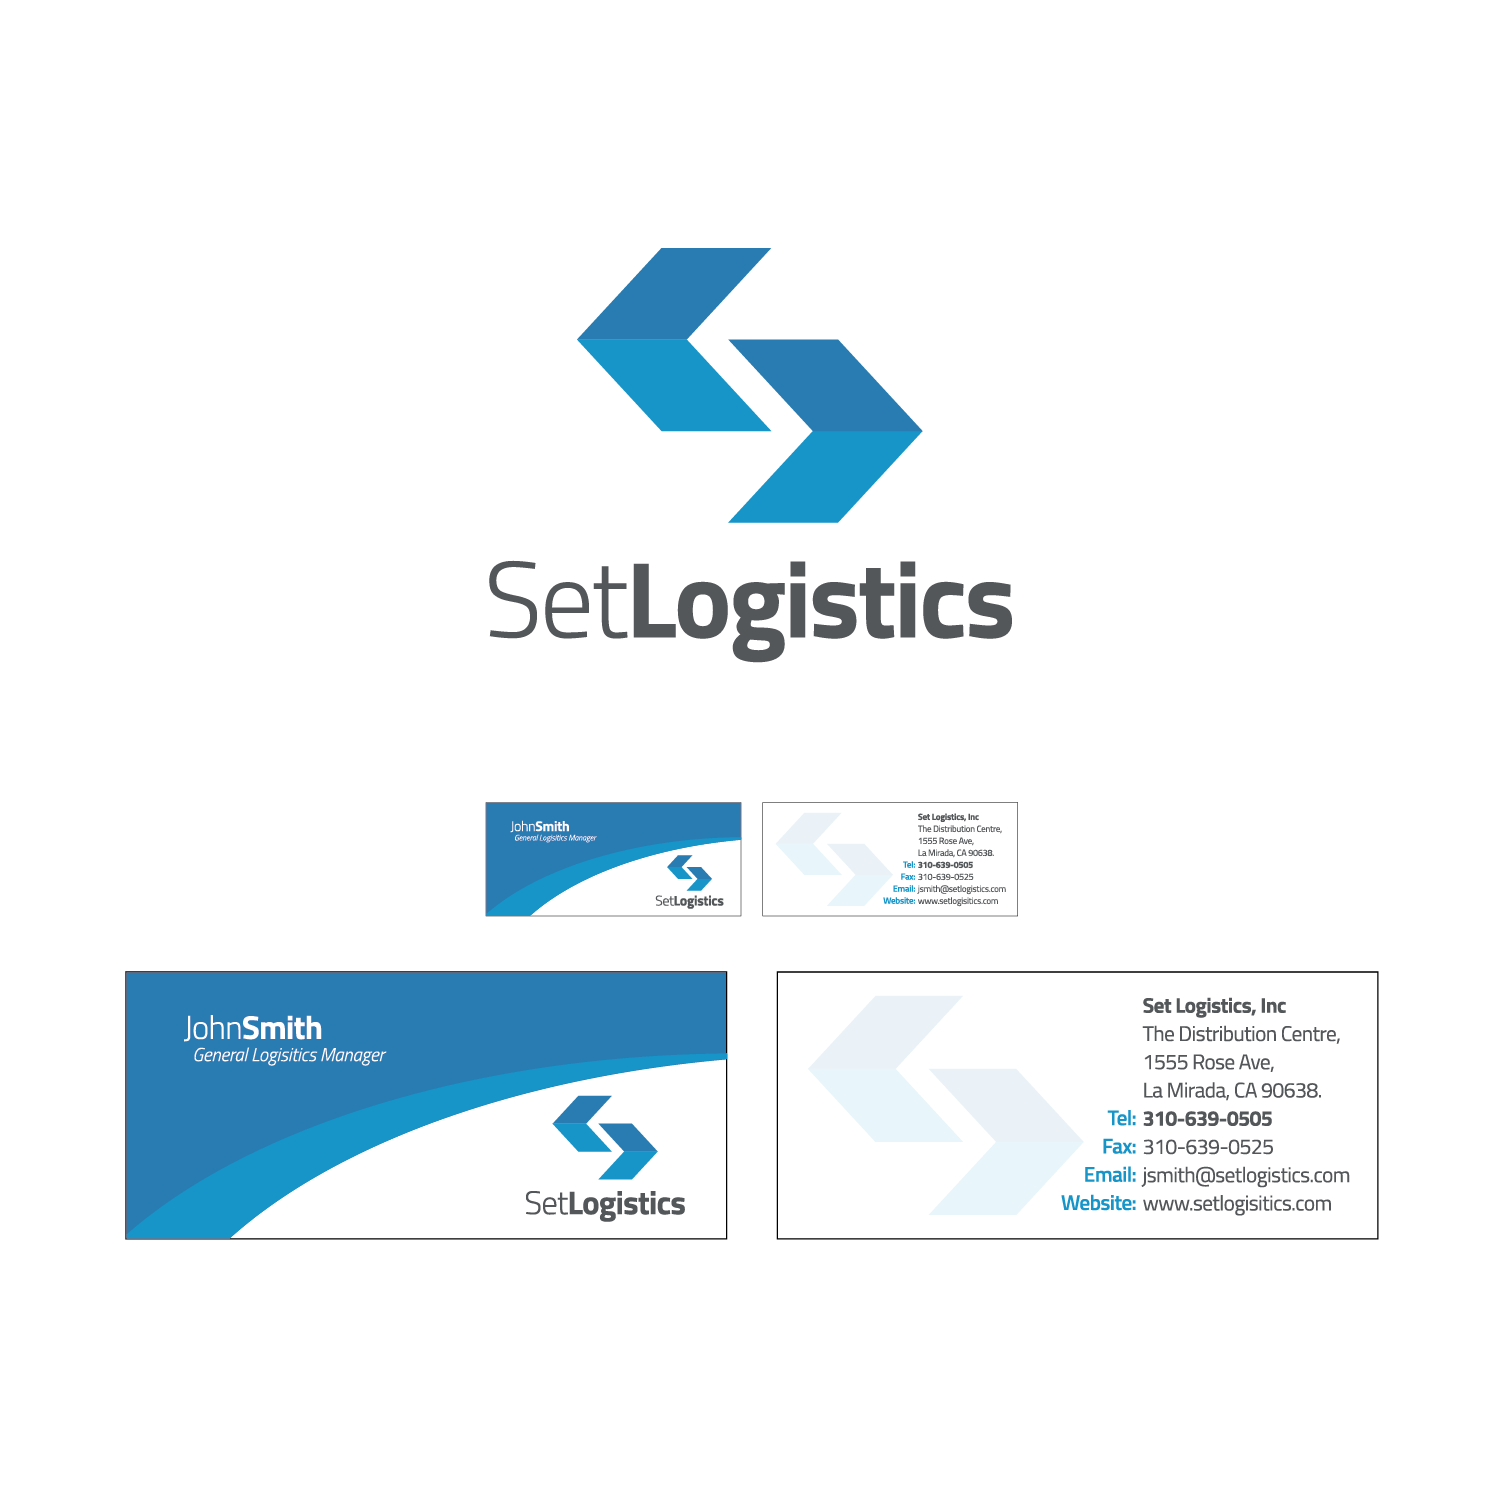 Logistics Company Logo - Professional, Masculine, It Company Logo Design for Set Logistics